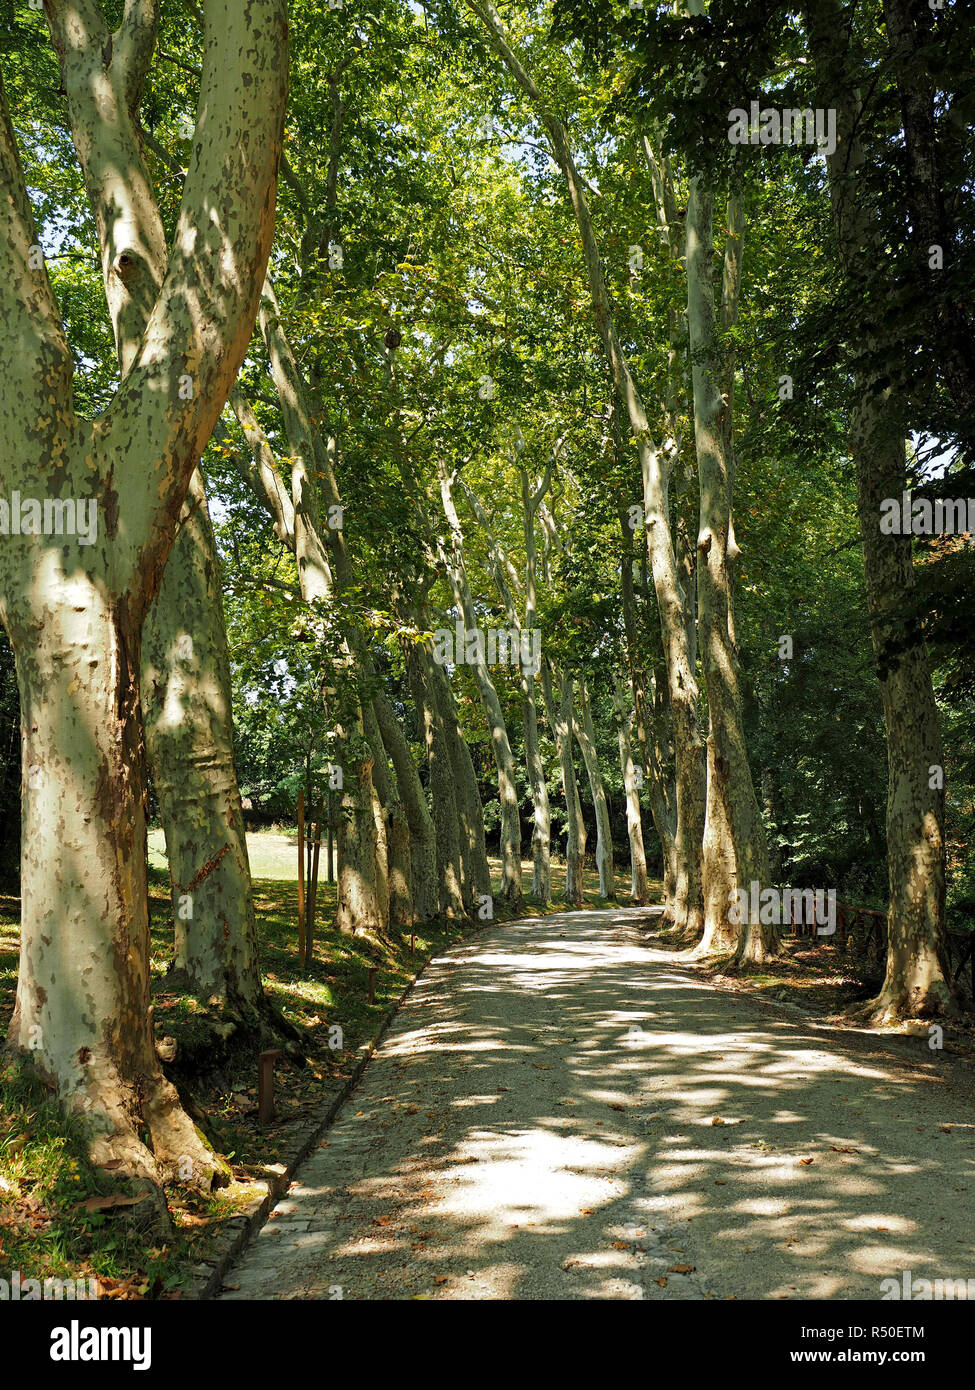 Avenue der hohen Reife London Platanen (Platanus x acerifolia oder Platanus x Hispanica) cast dappled Schatten auf einem Feldweg in der Toskana, Italien Stockfoto